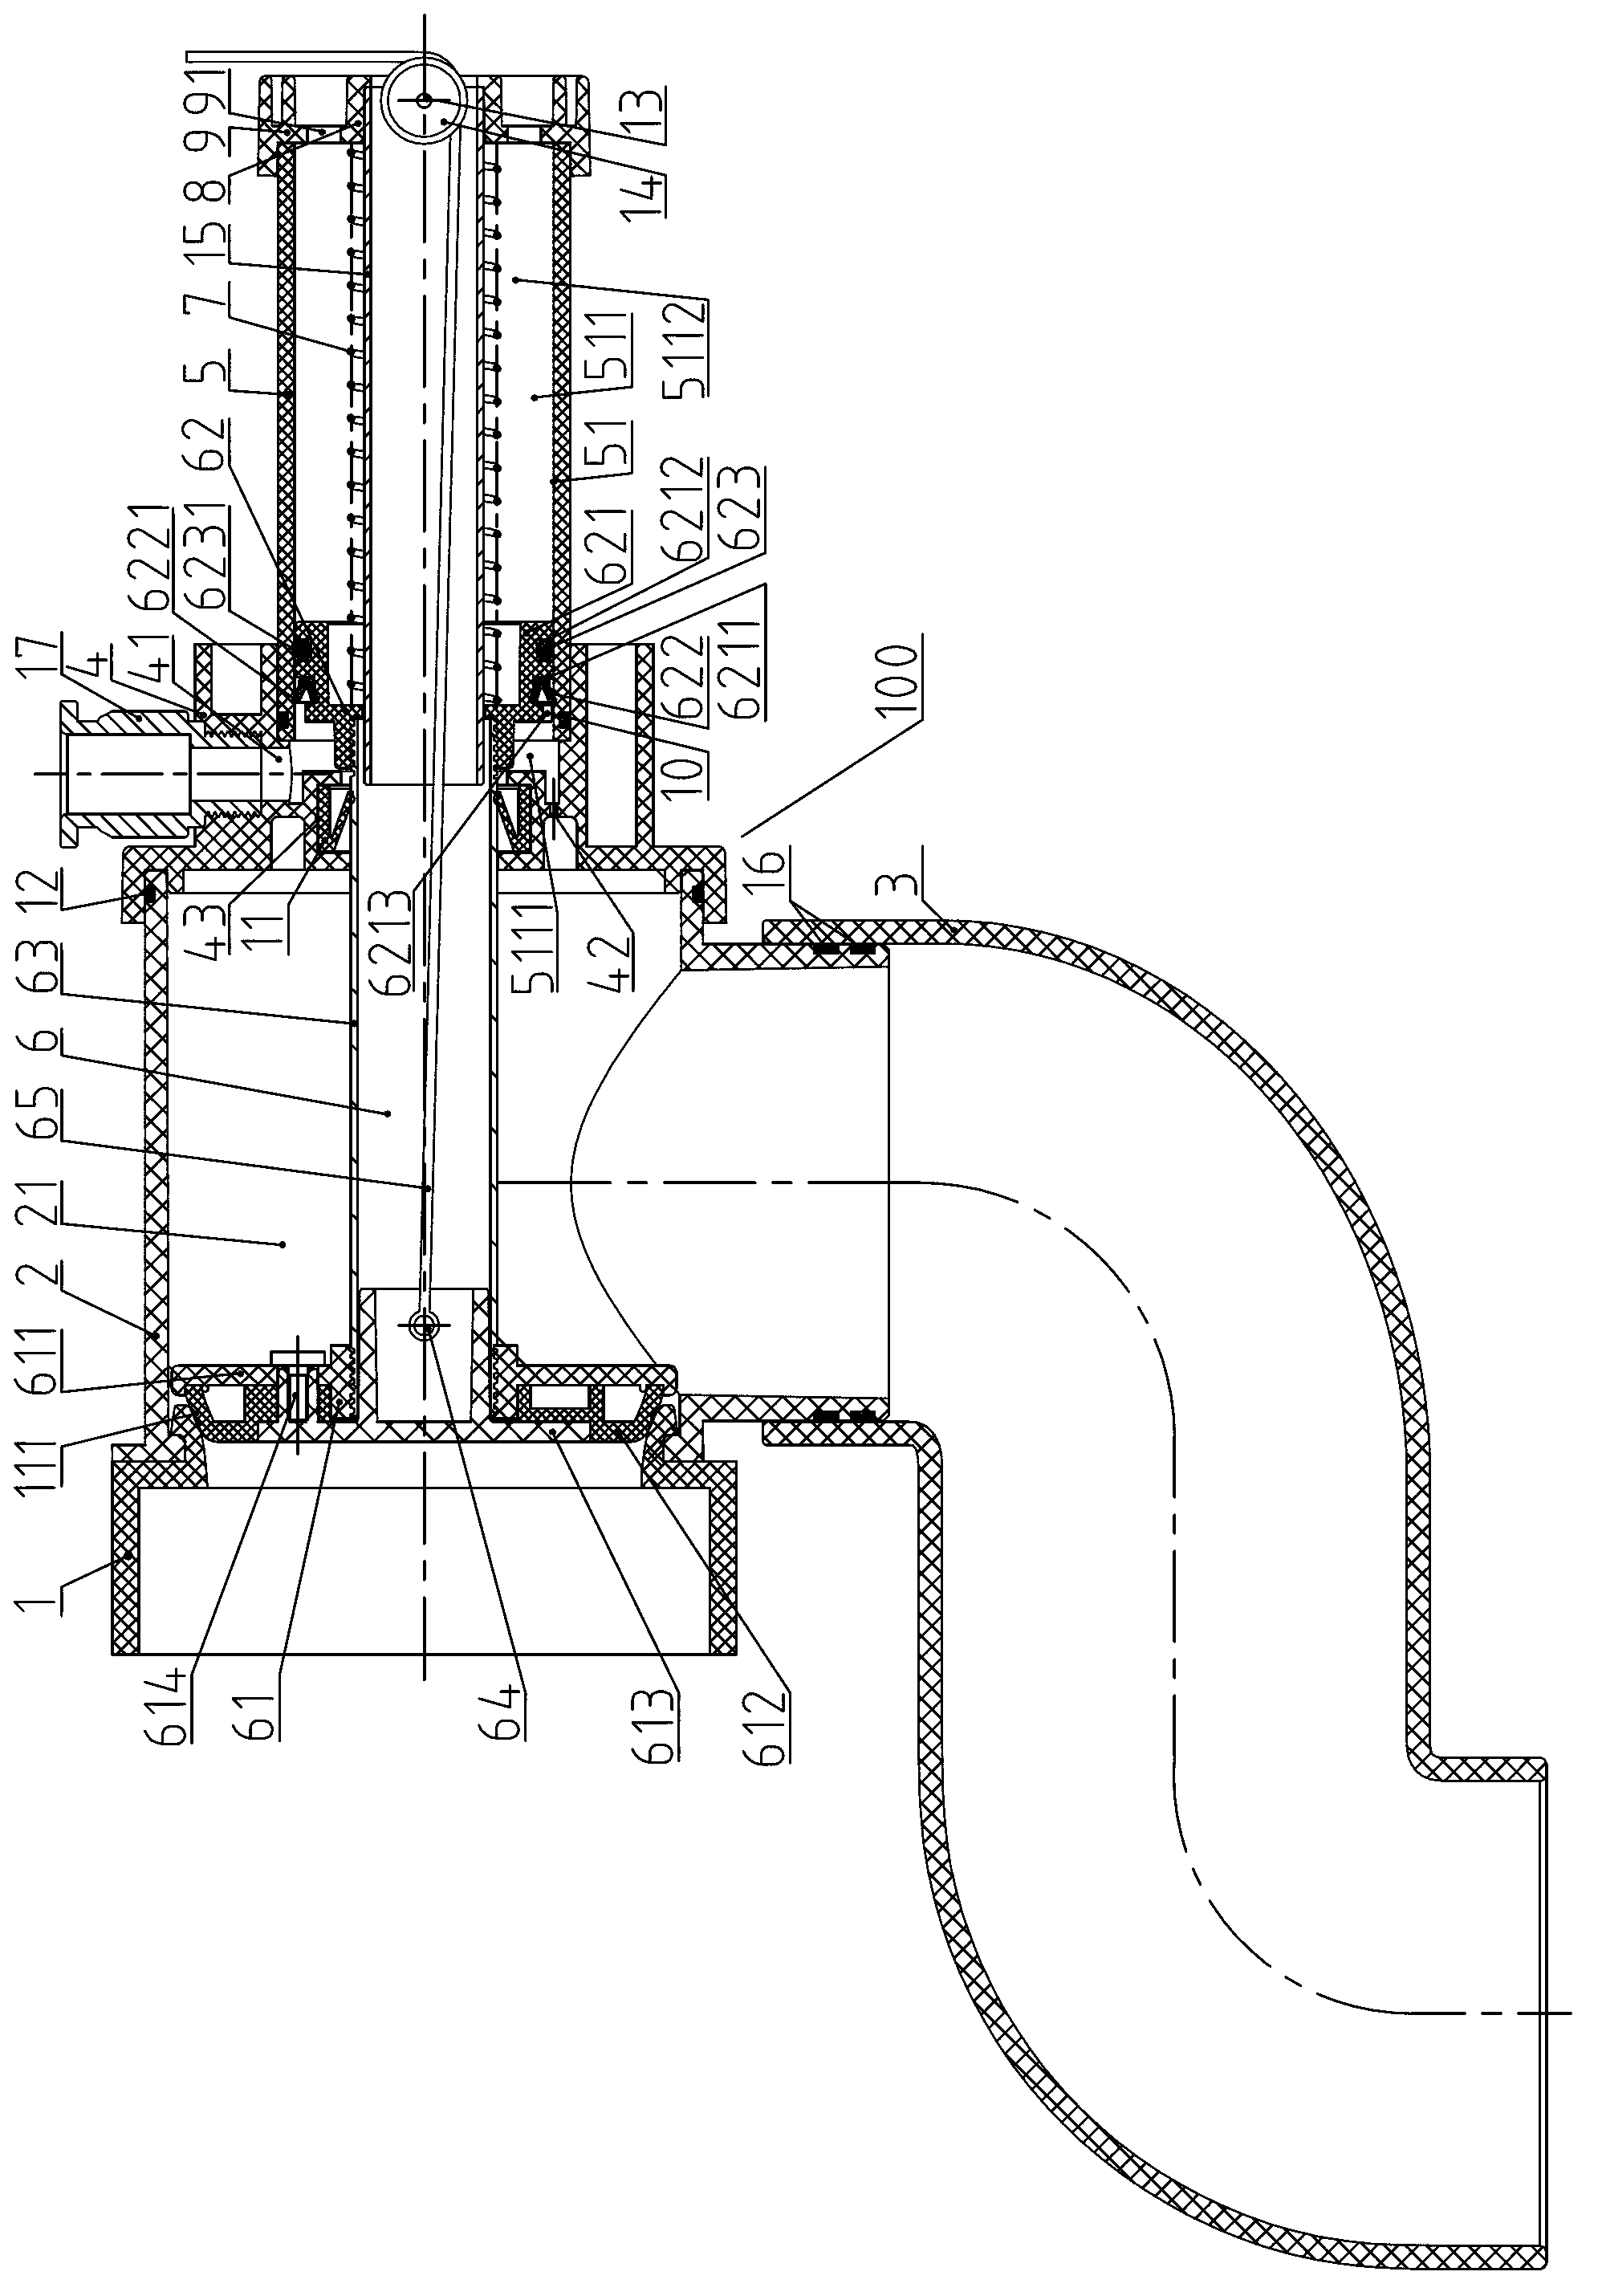 Novel direct-discharging type closestool blowdown system and novel non-water-tank closestool flushing system